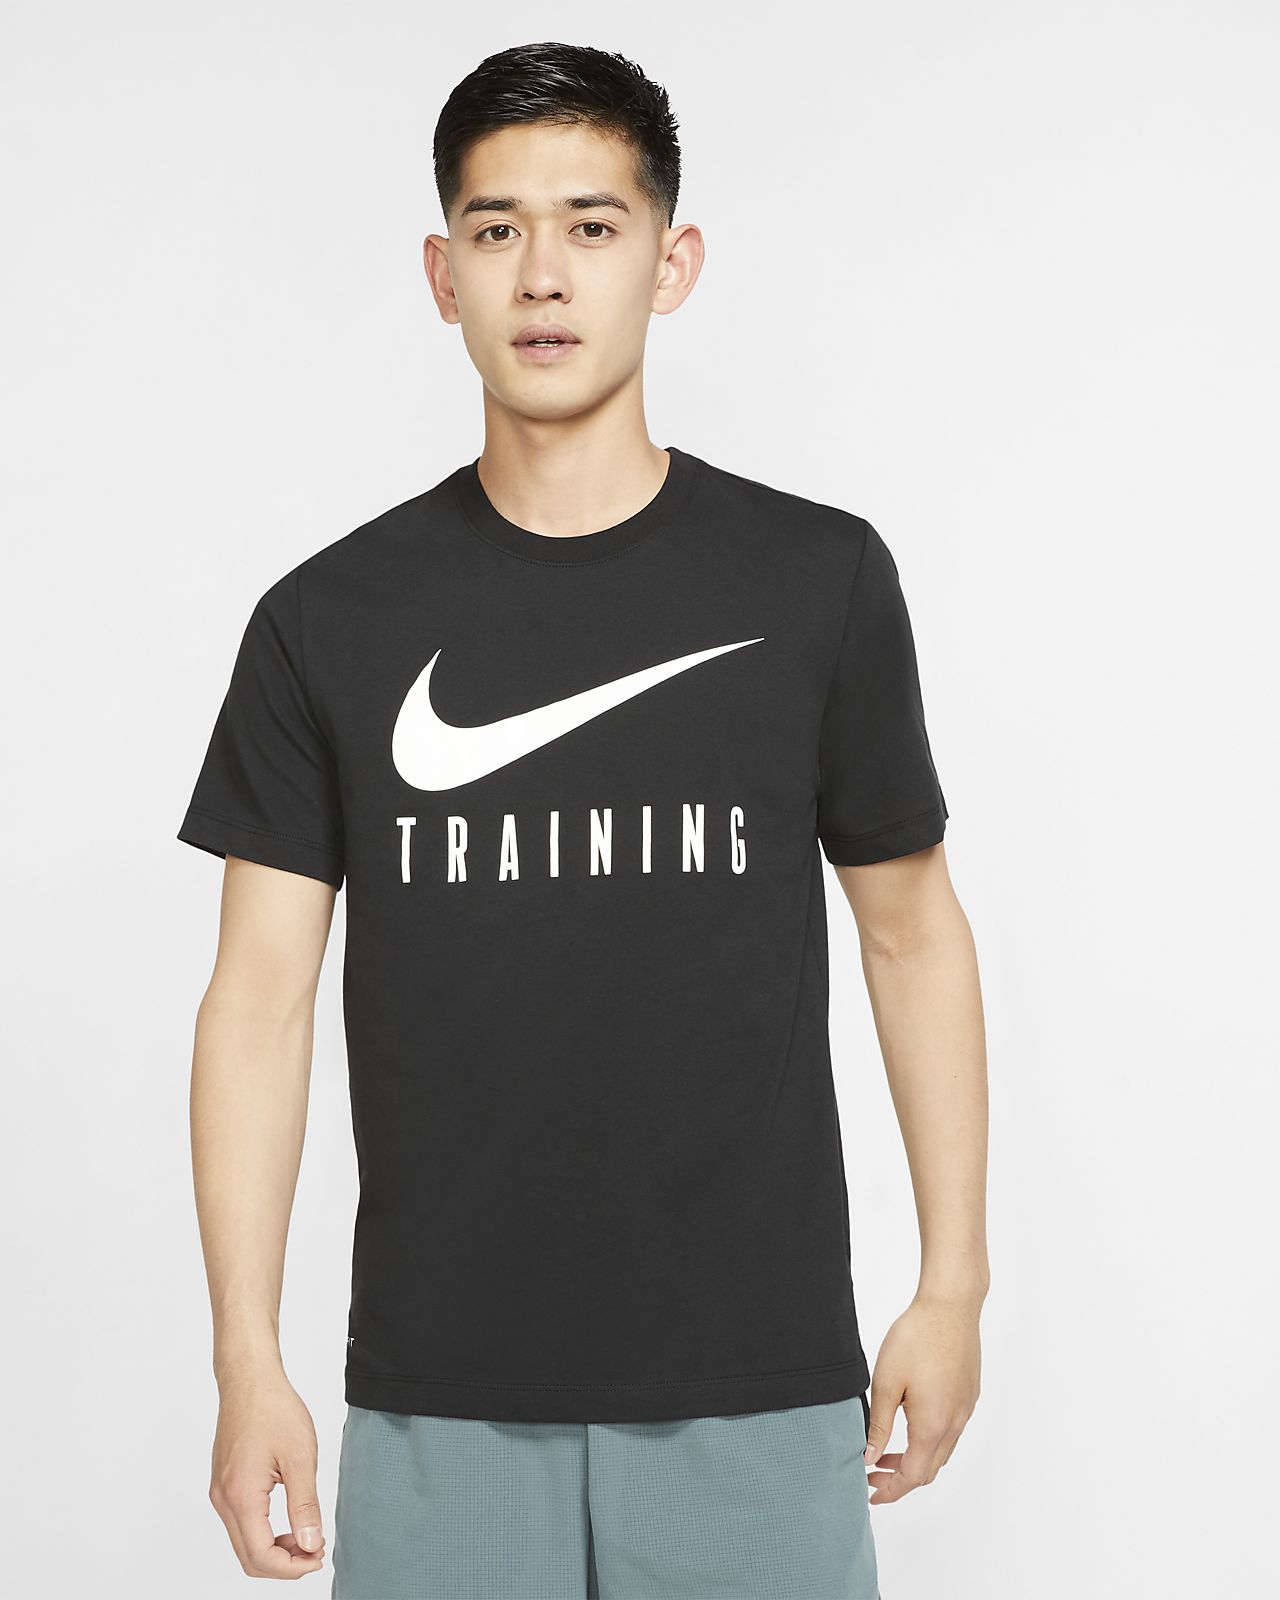 Nike T Shirts Shop, SAVE 38% - aveclumiere.com